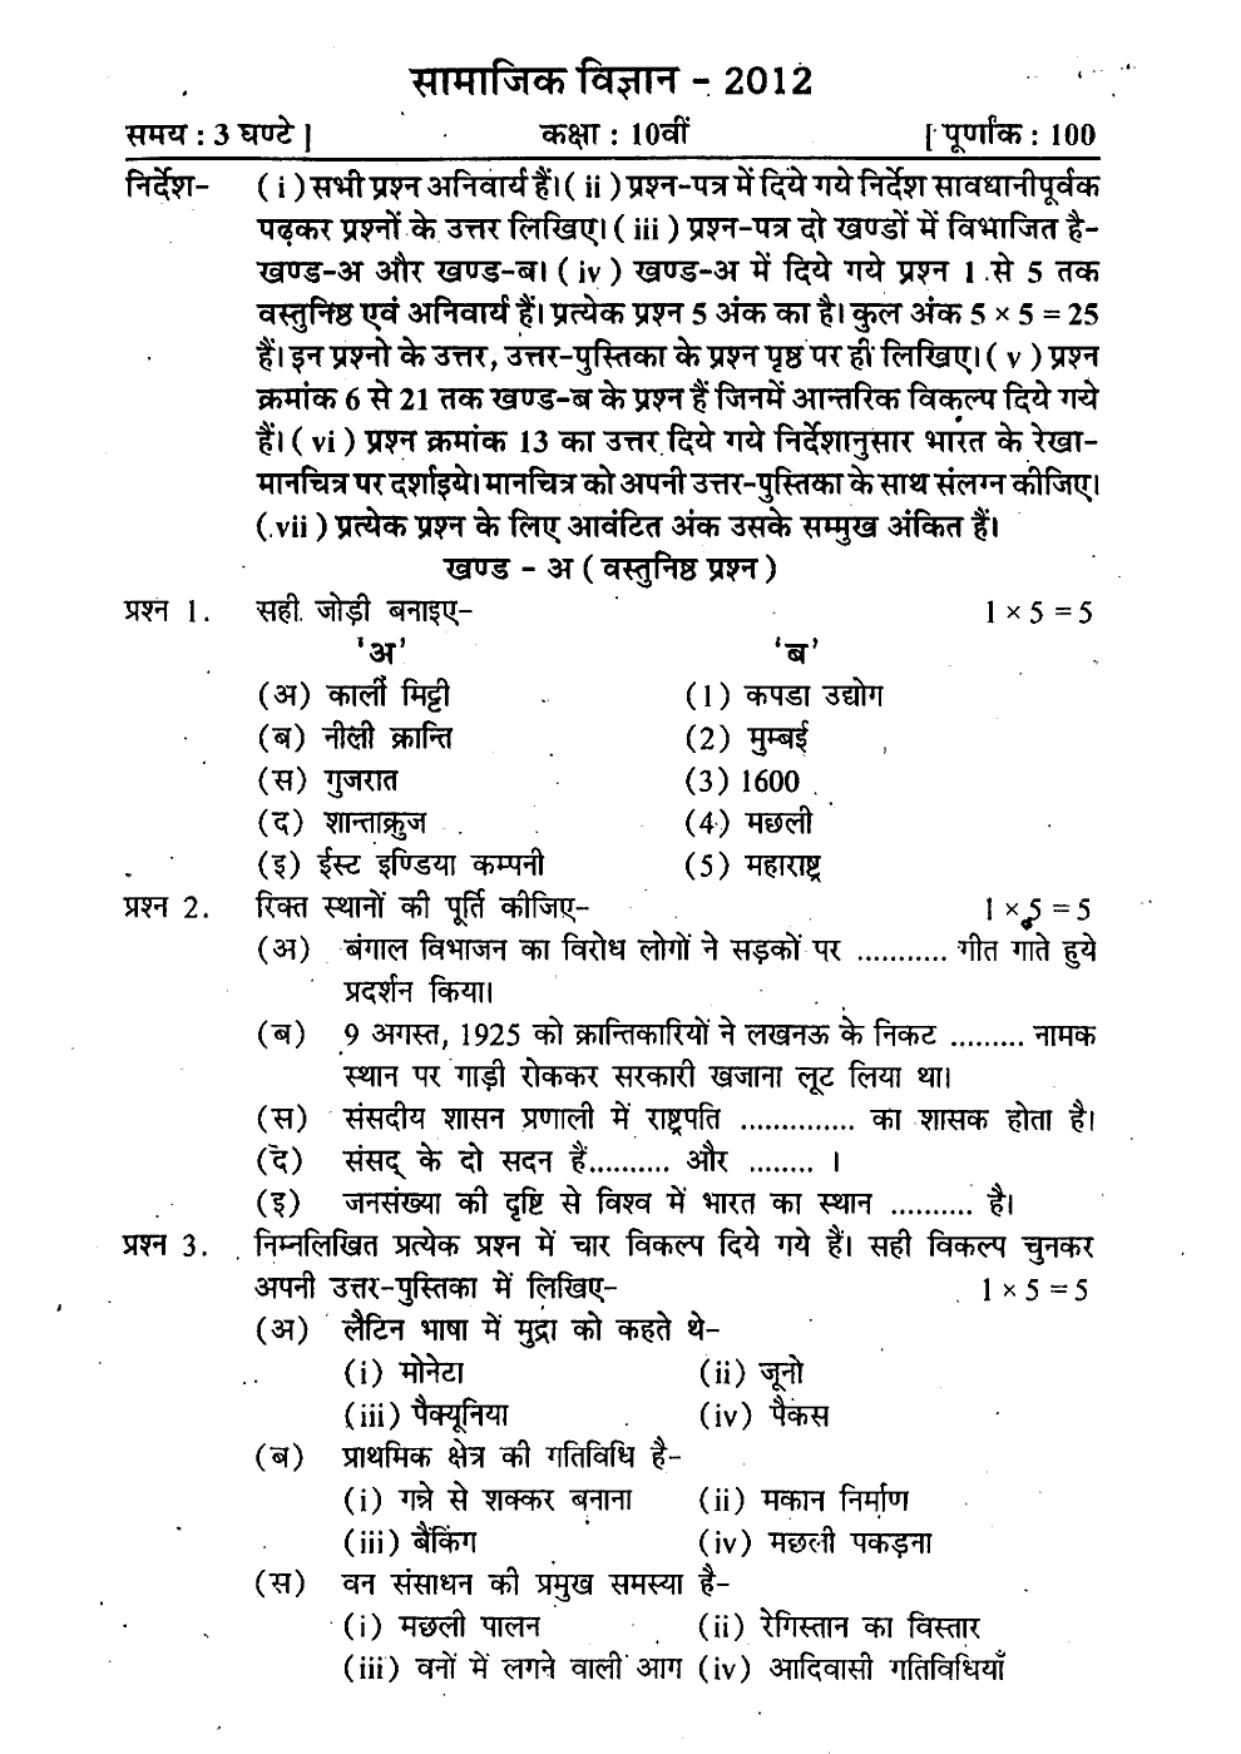 MP Board Class 10 Social Science (Hindi Medium) 2012 Question Paper - Page 1